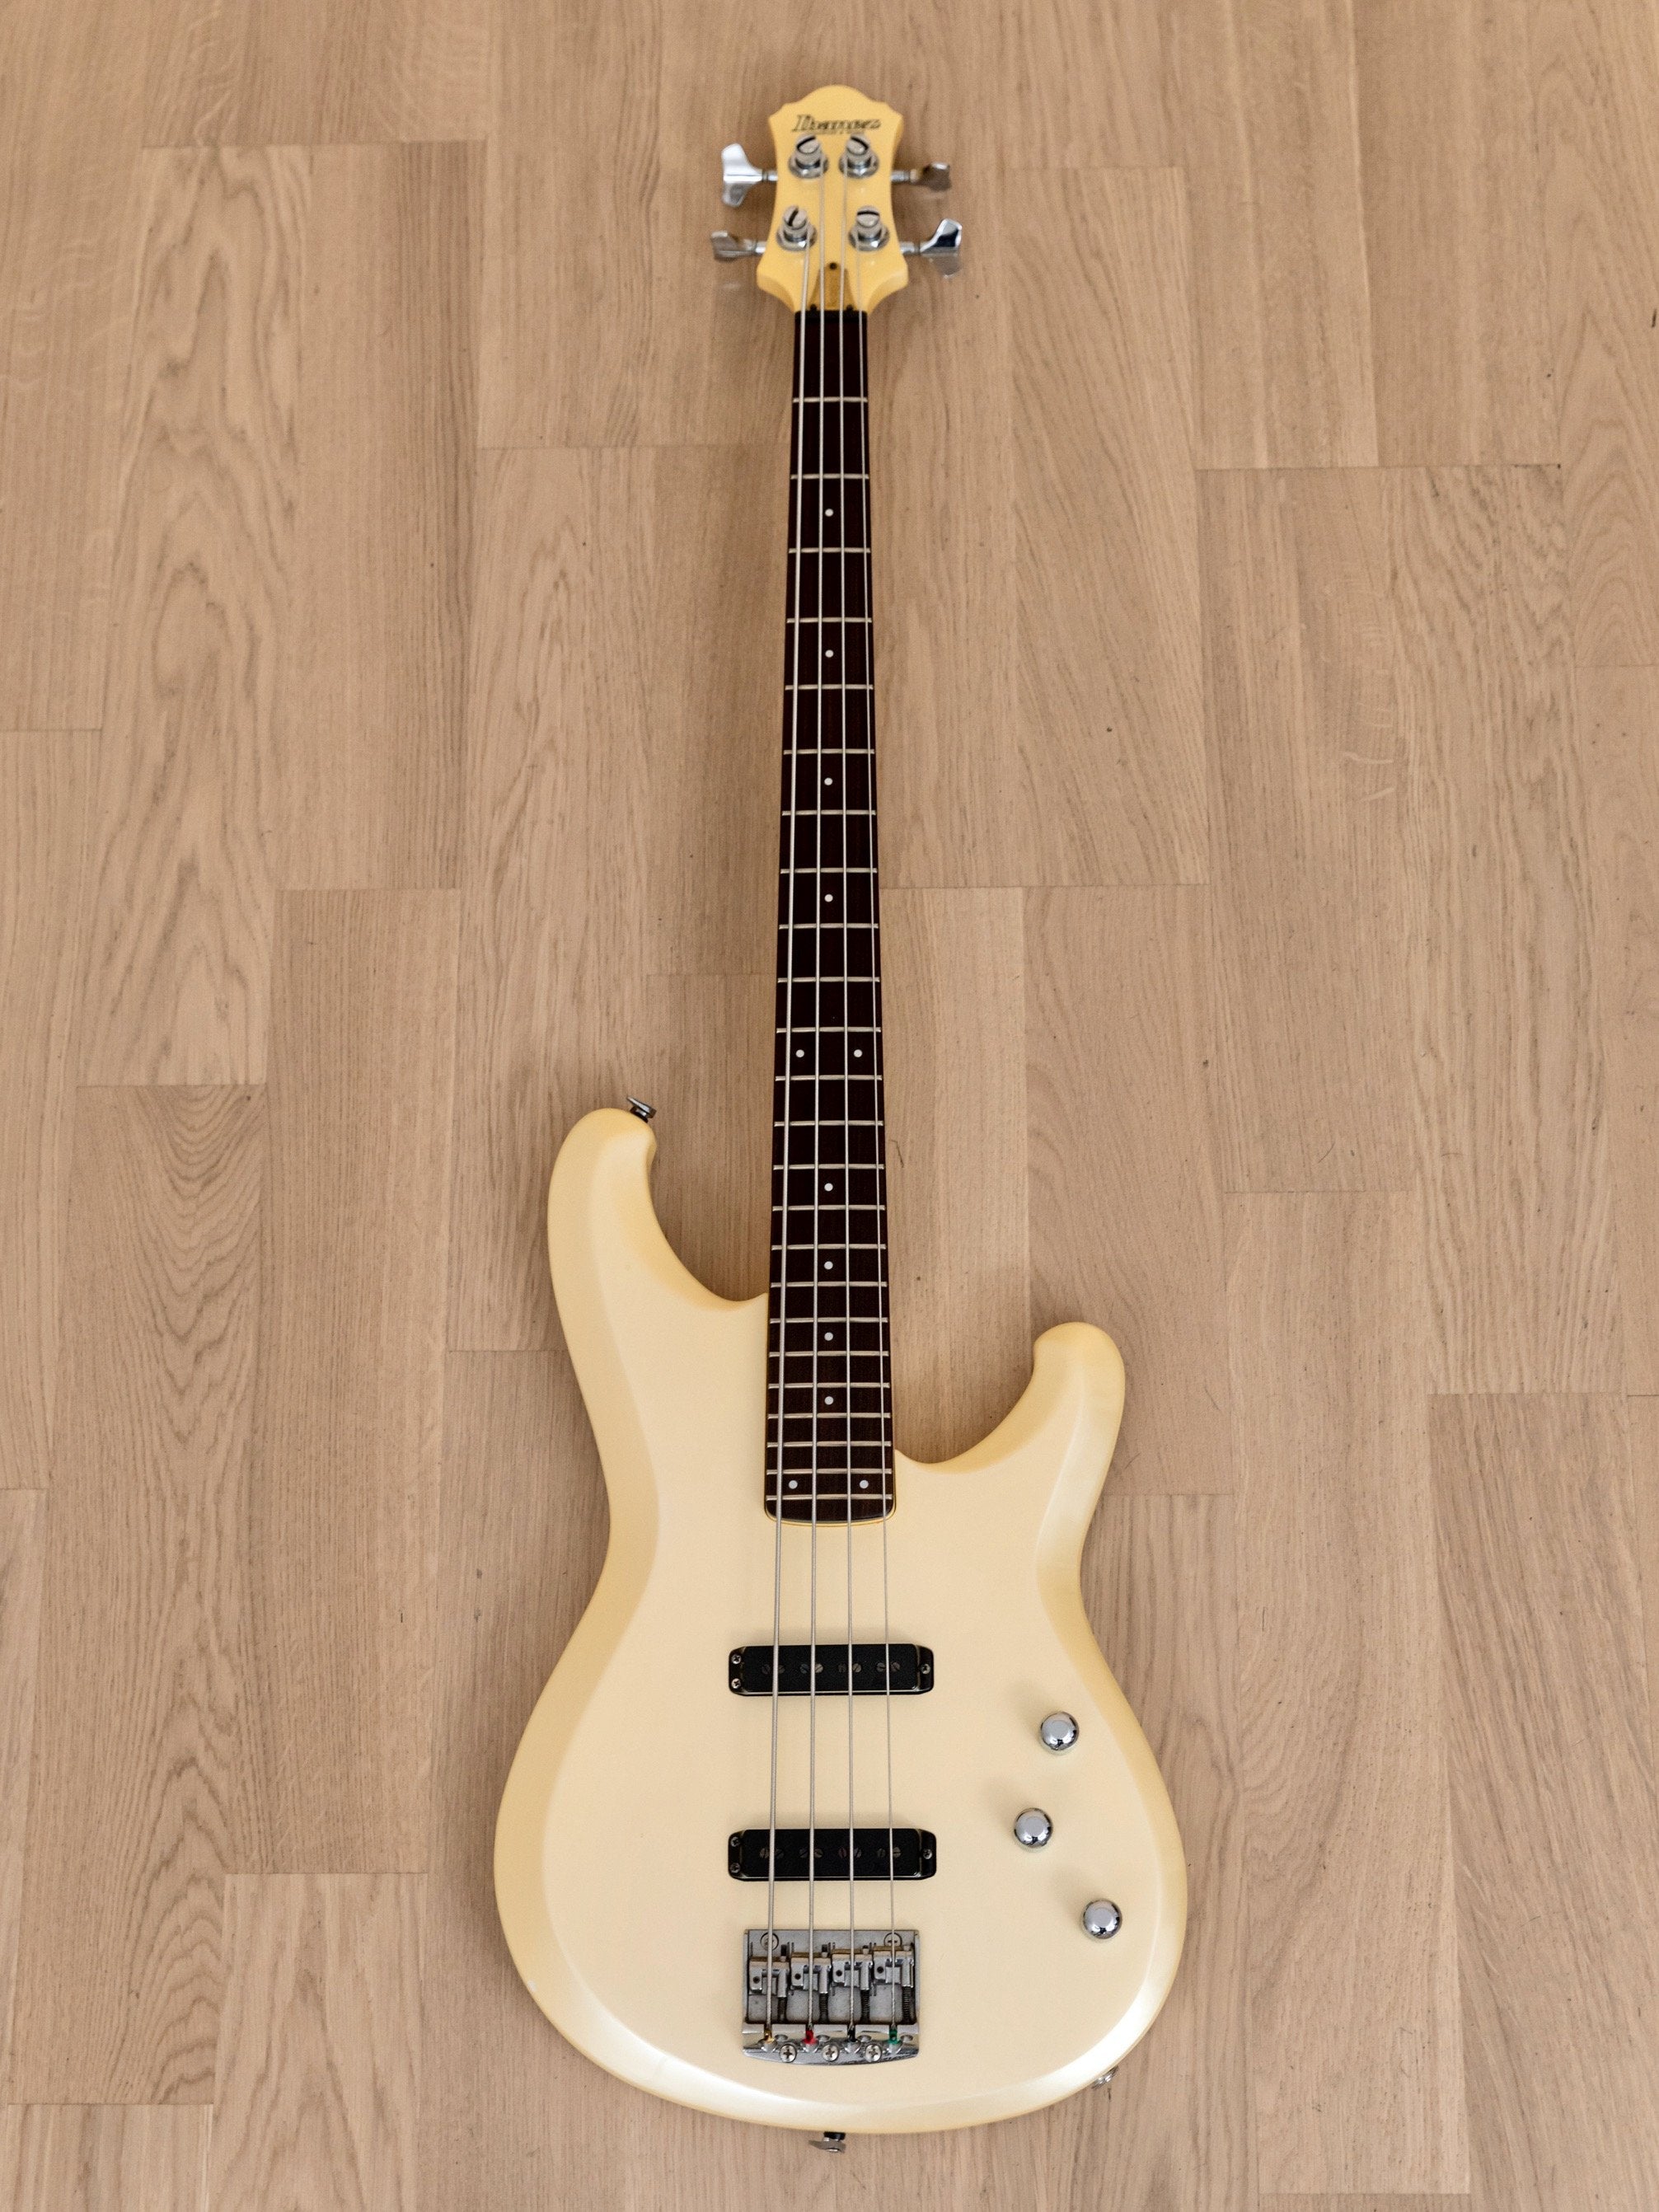 1986 Ibanez Roadstar Bass RB550 Vintage Bass Guitar Polar White, 100% Original, Japan Fujigen